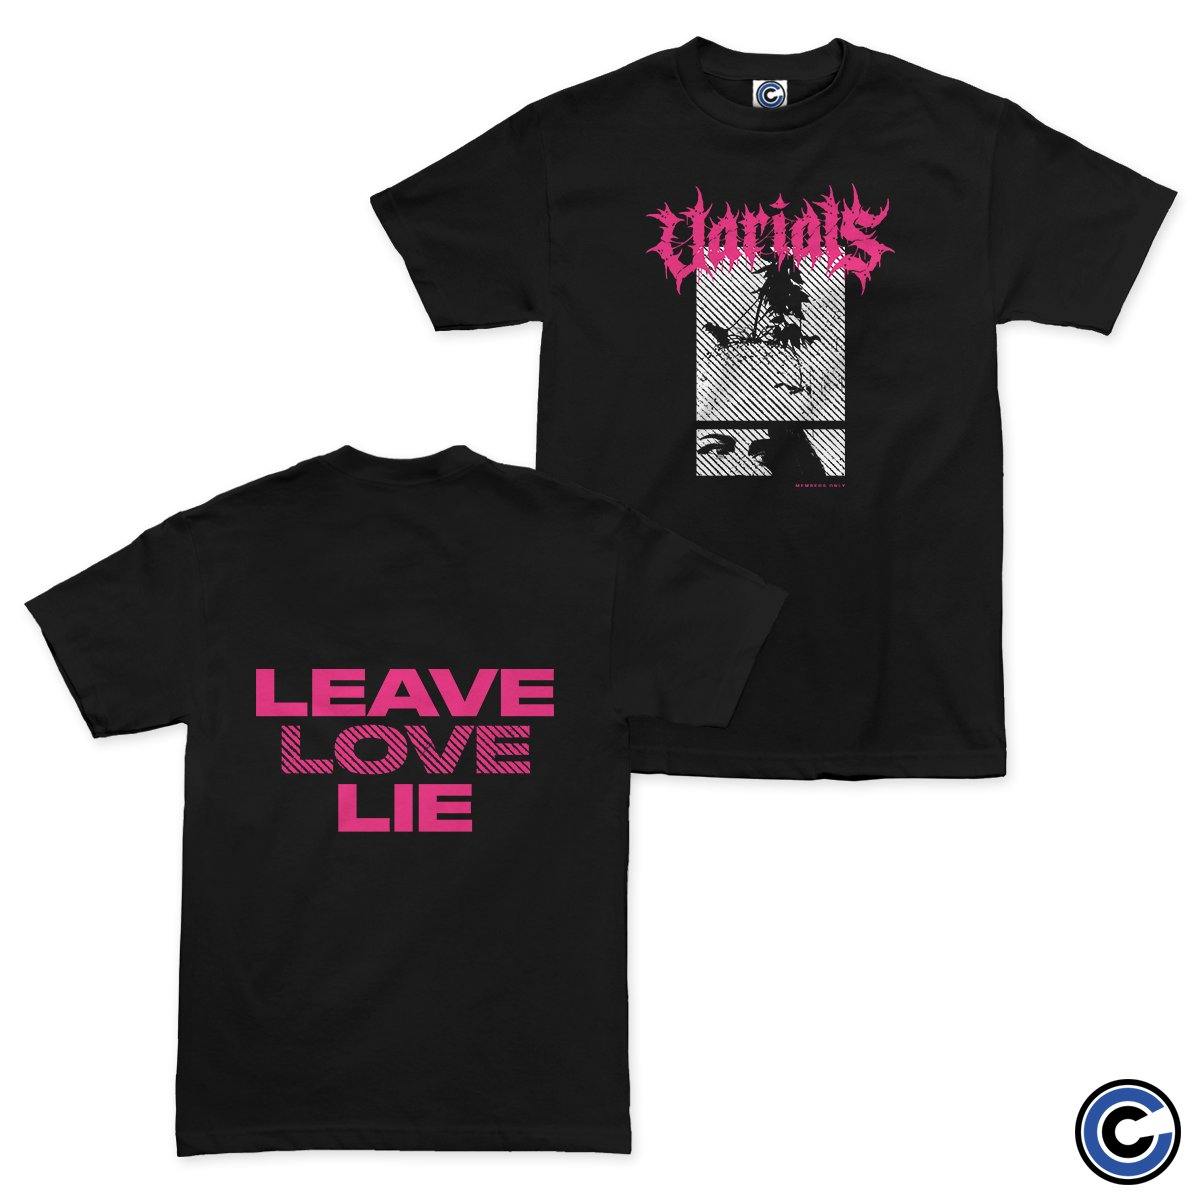 Buy – Varials "Lie" Shirt – Band & Music Merch – Cold Cuts Merch